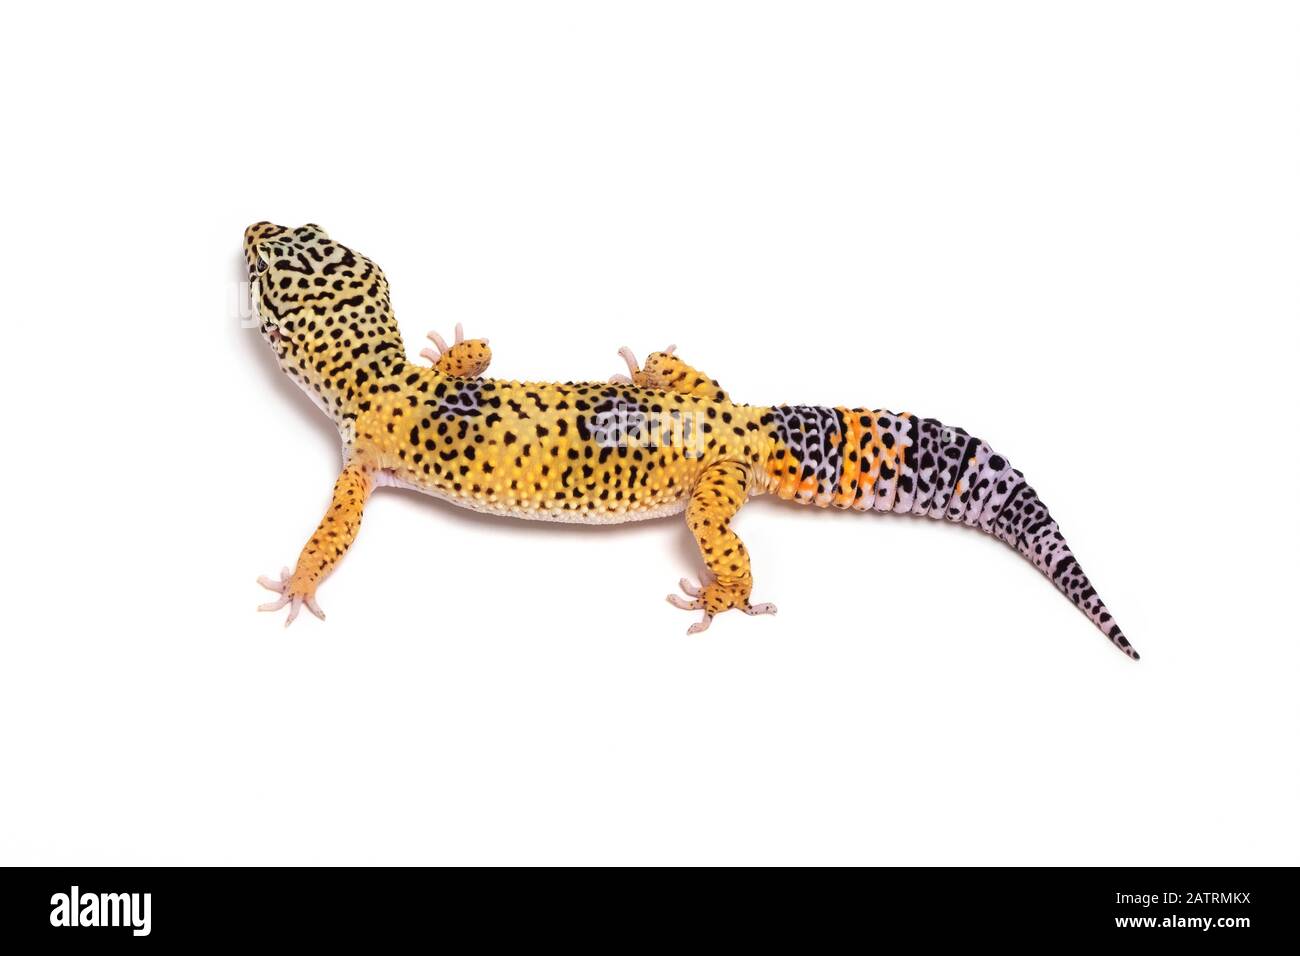 Leopard gecko (Eublepharis macularius) on a white background; Studio Stock Photo